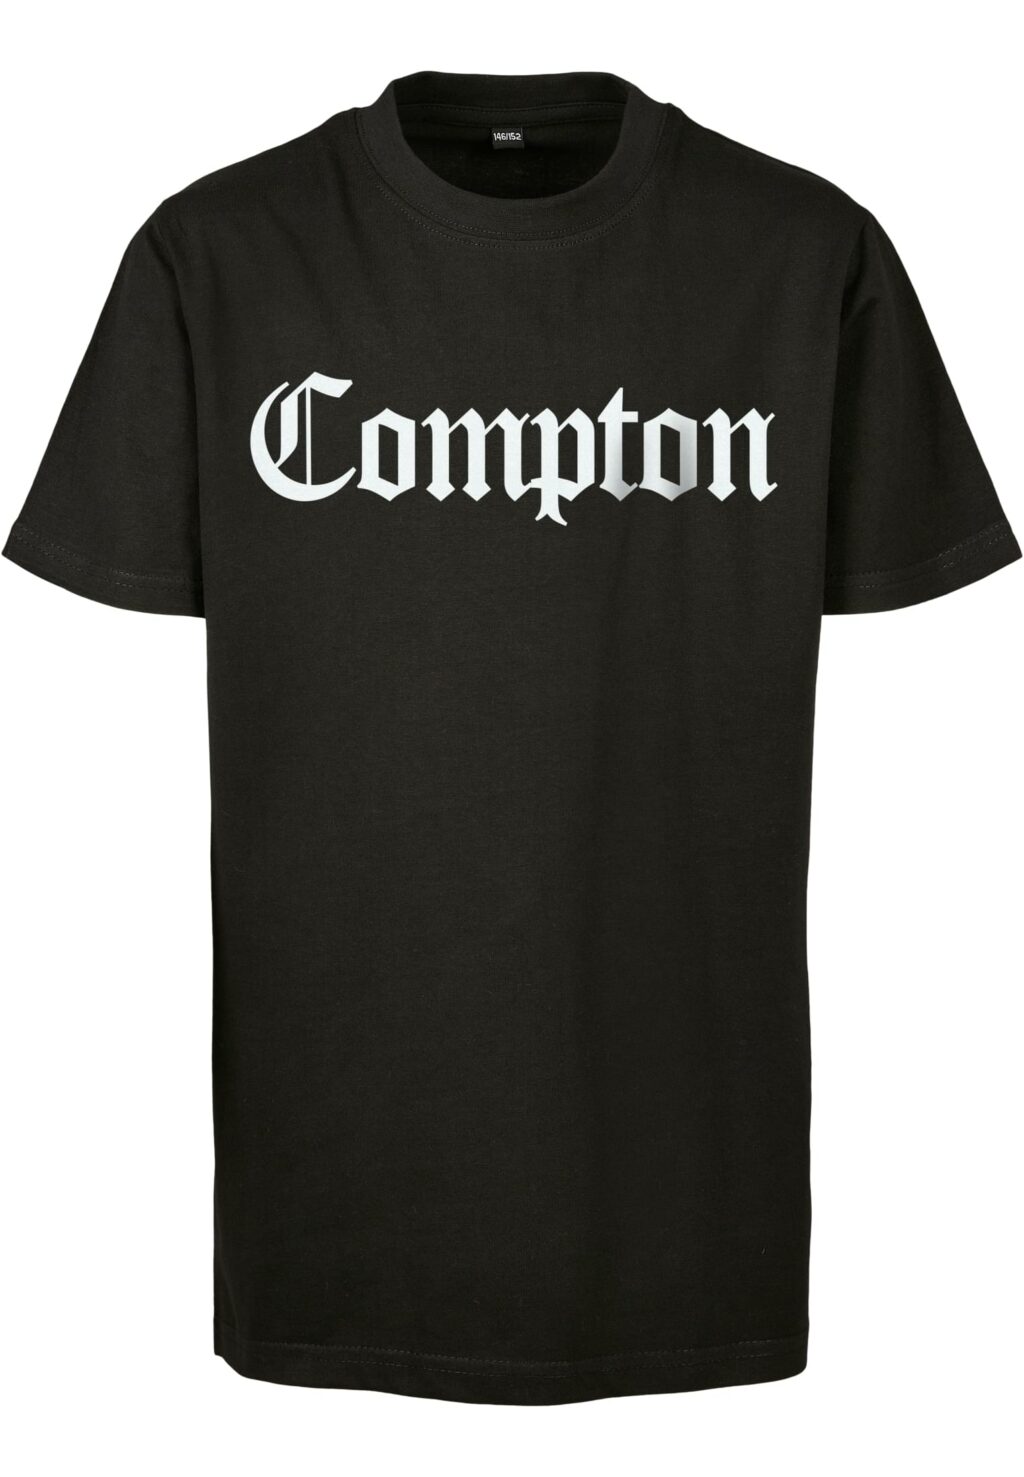 Kids Compton Tee black MTK206